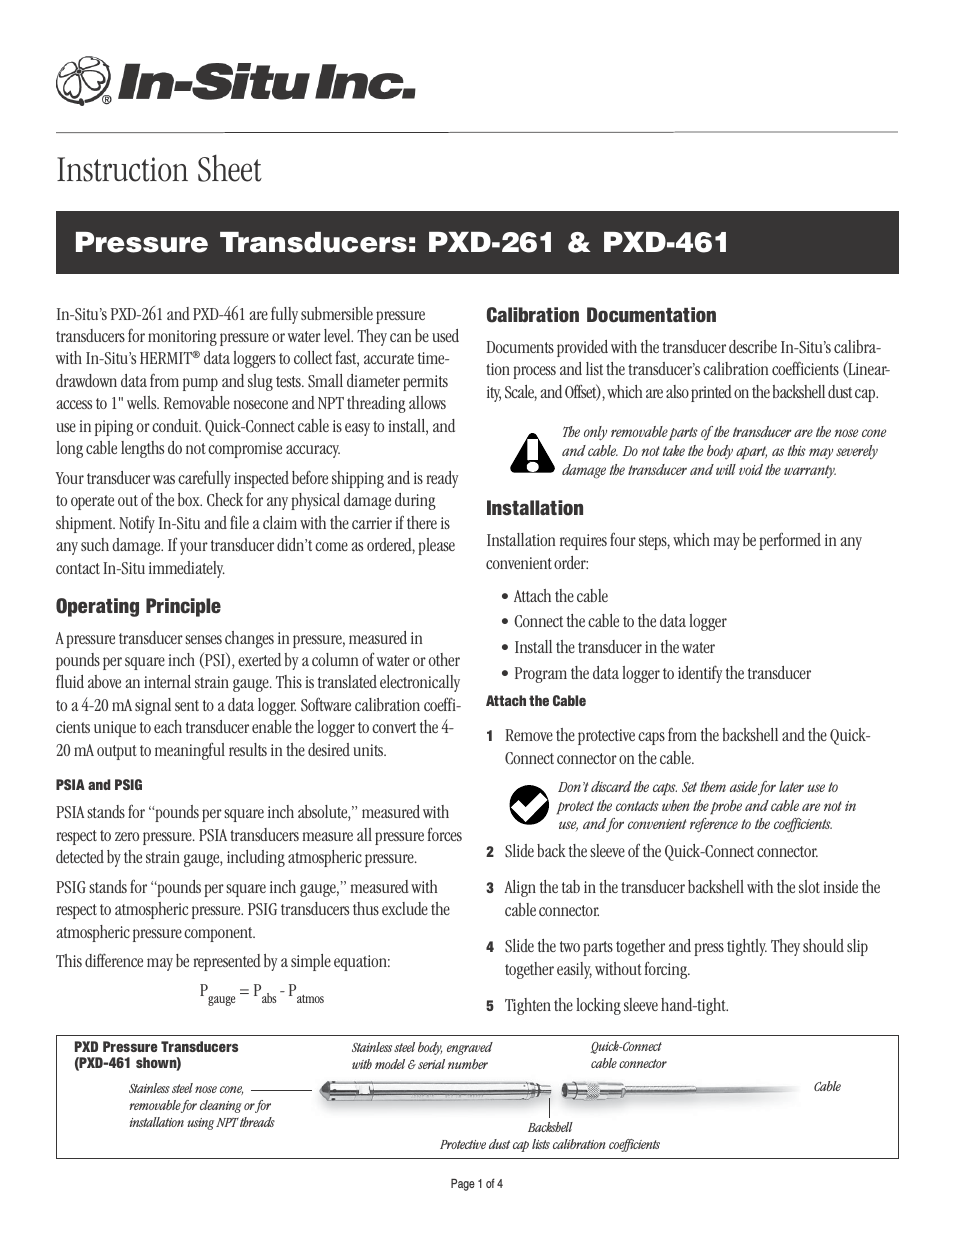 PXD-461 Operators Manual